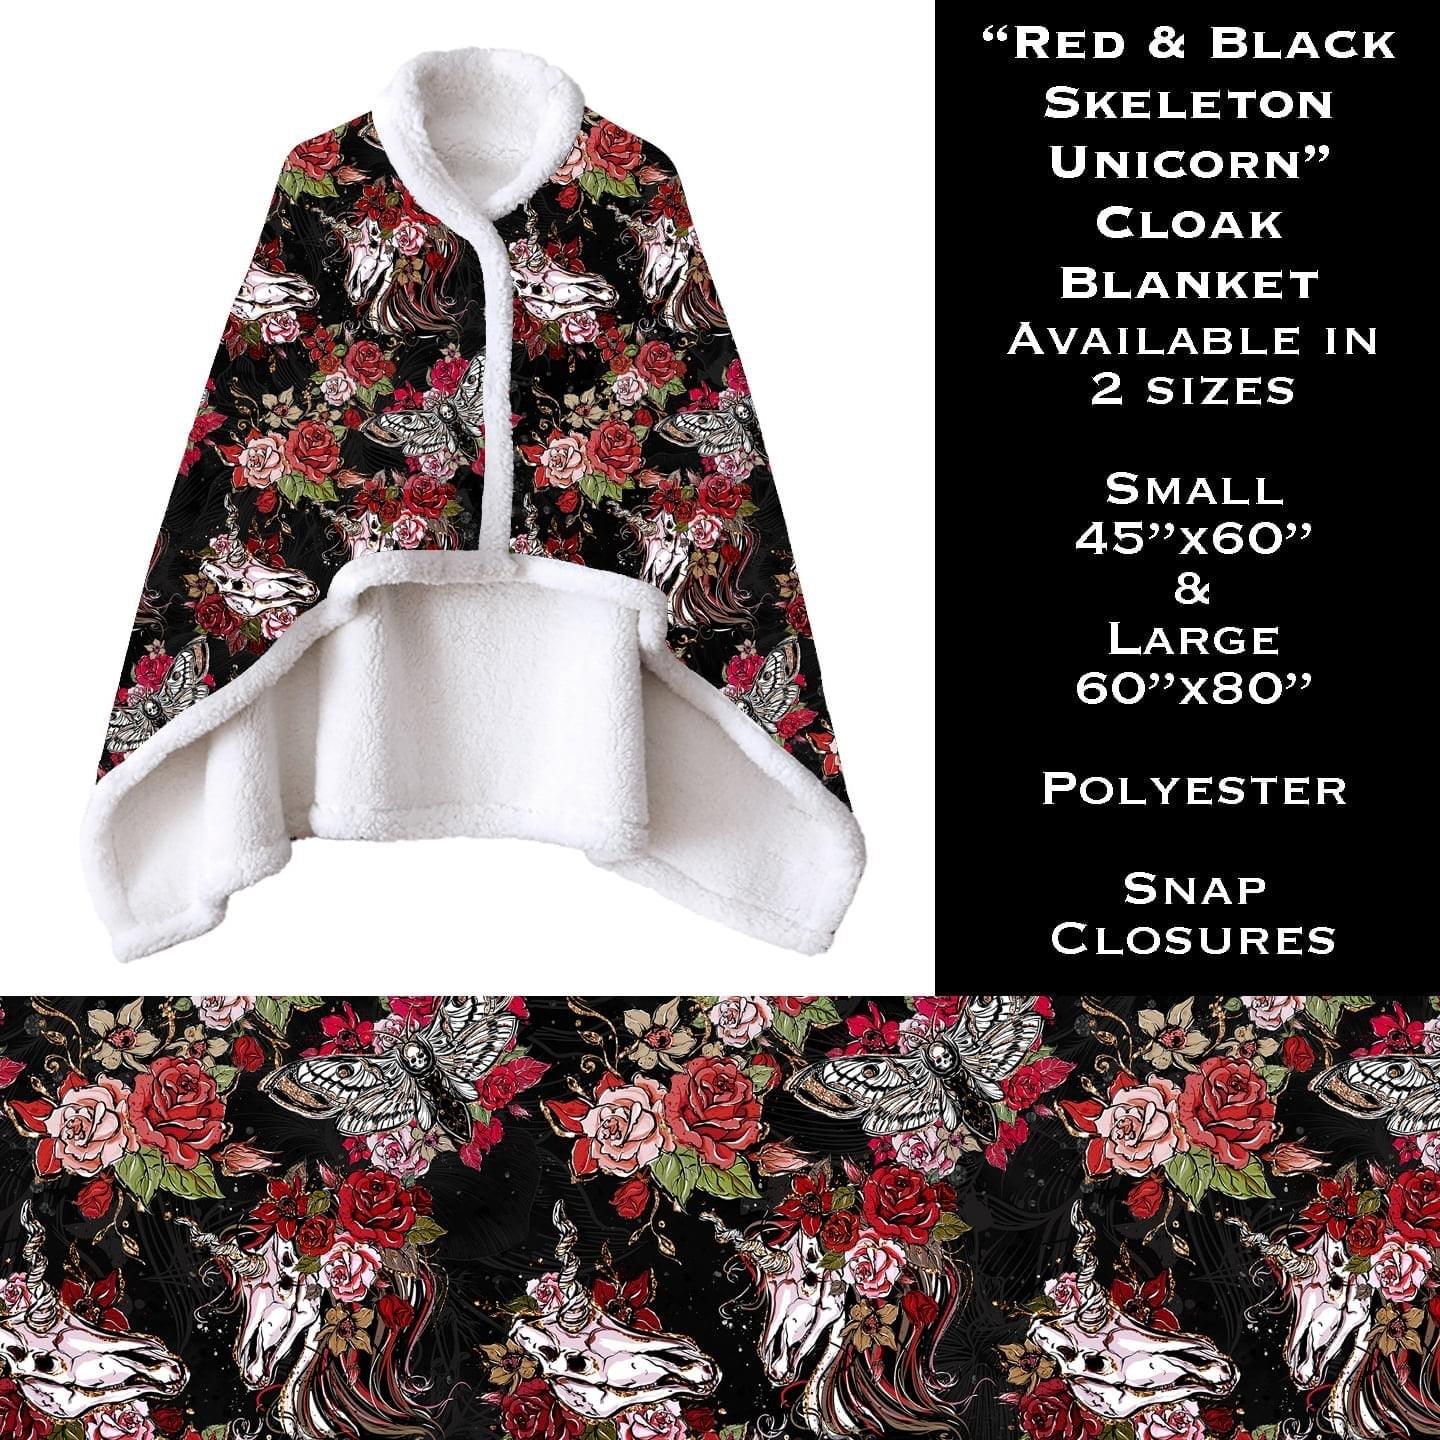 Red & Black Skeleton Unicorn Cloak Blanket - That’s So Fletch Boutique 